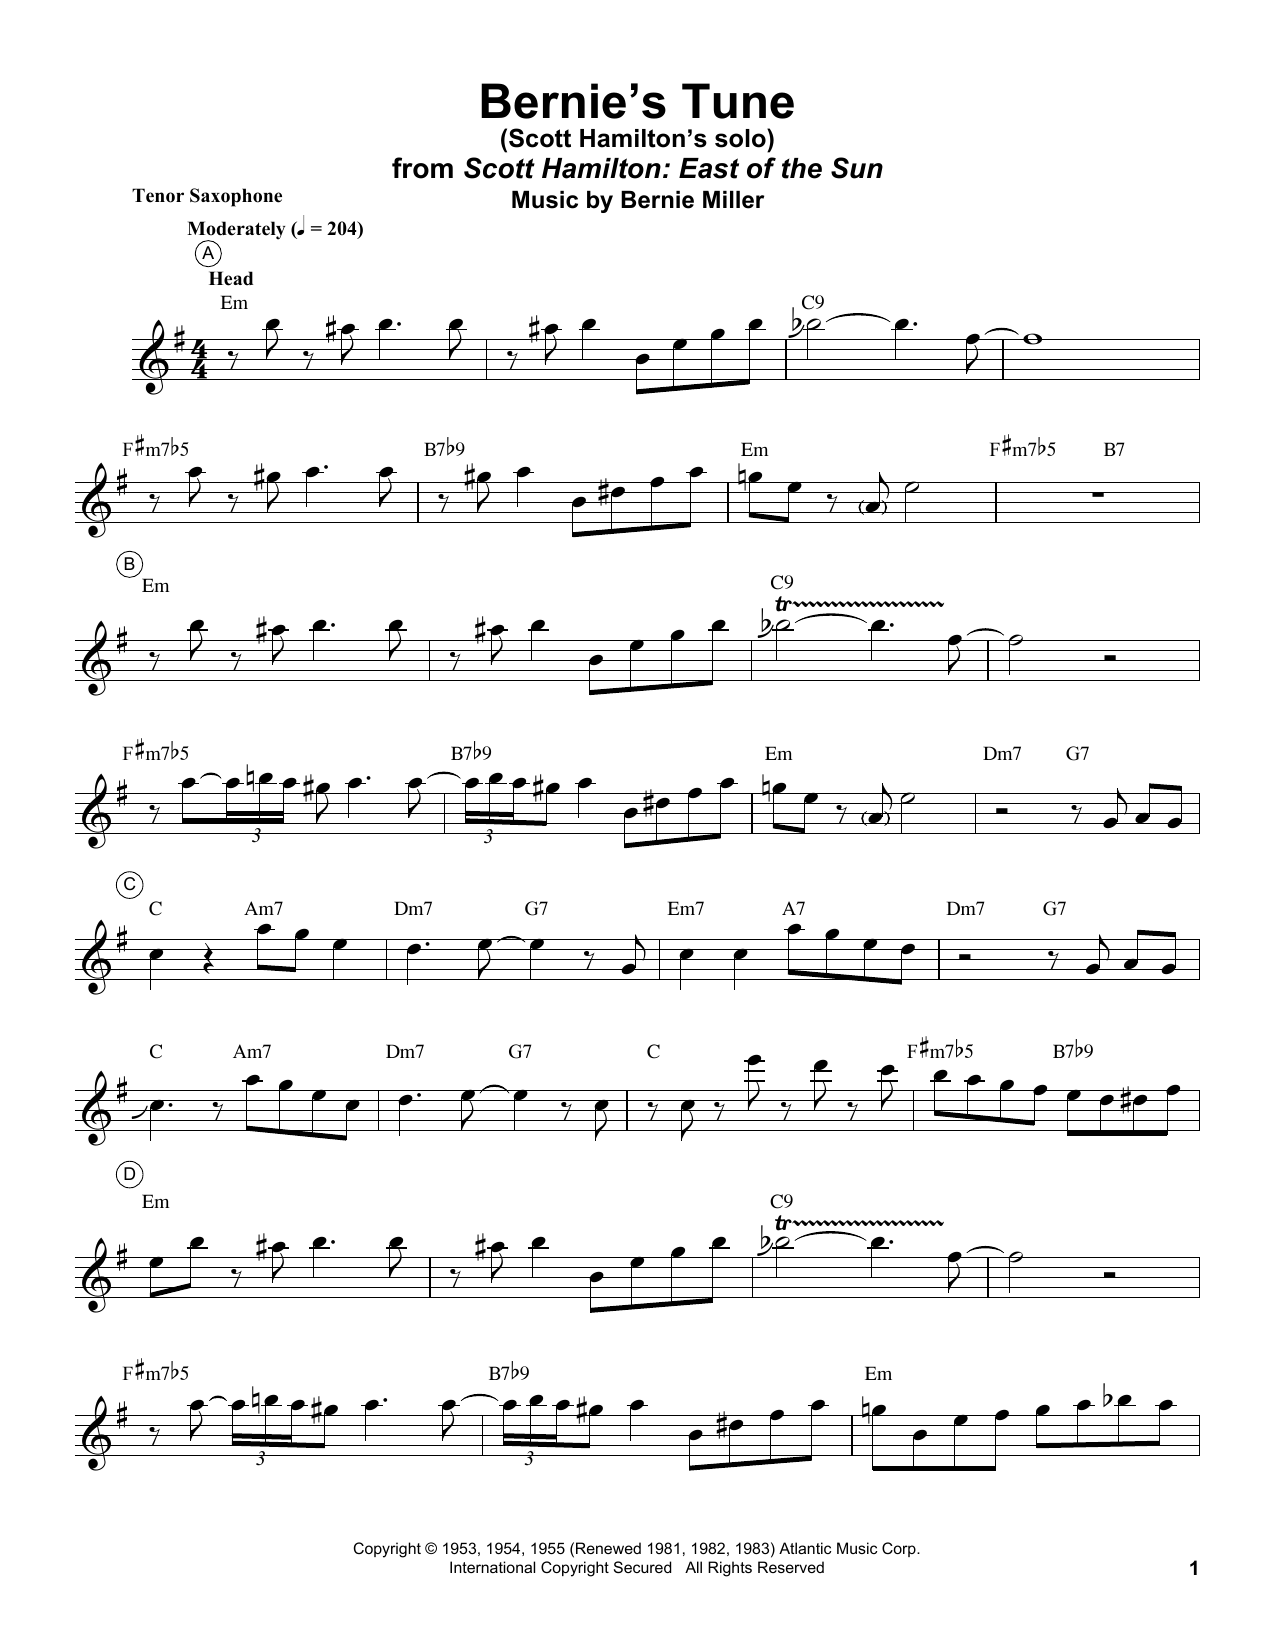 Scott Hamilton Bernie's Tune Sheet Music Notes & Chords for Tenor Sax Transcription - Download or Print PDF